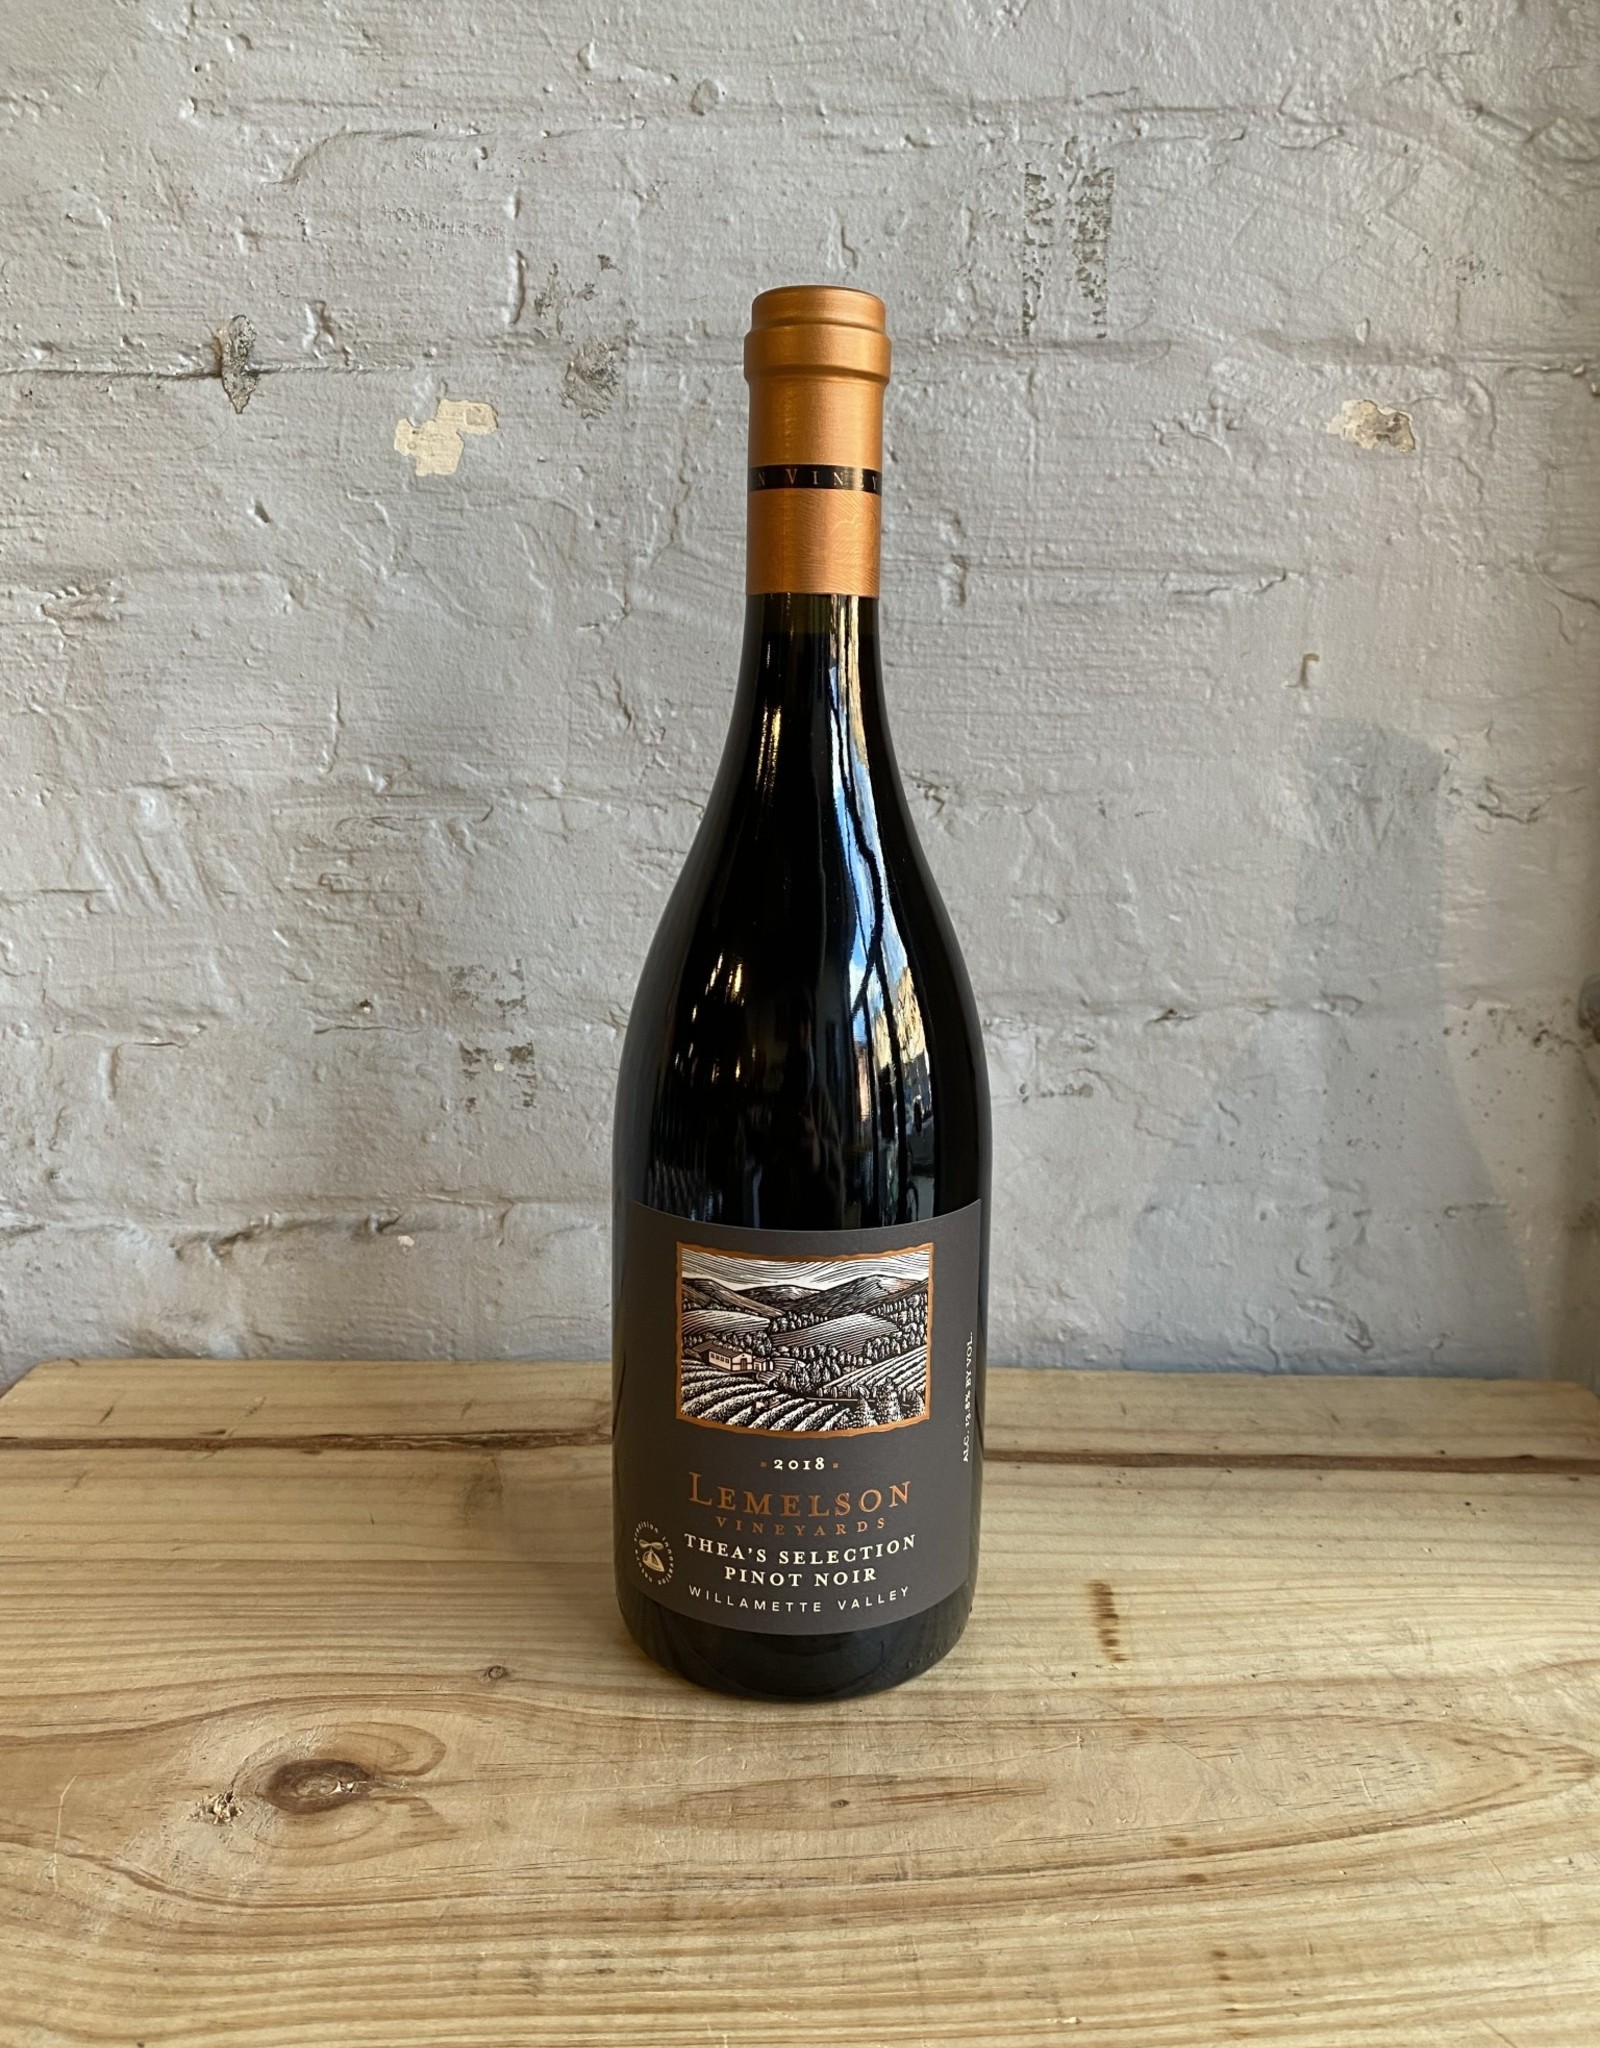 Wine 2018 Lemelson Vineyards Thea's  Selection Pinot Noir - Willamette Valley, Oregon (750ml)